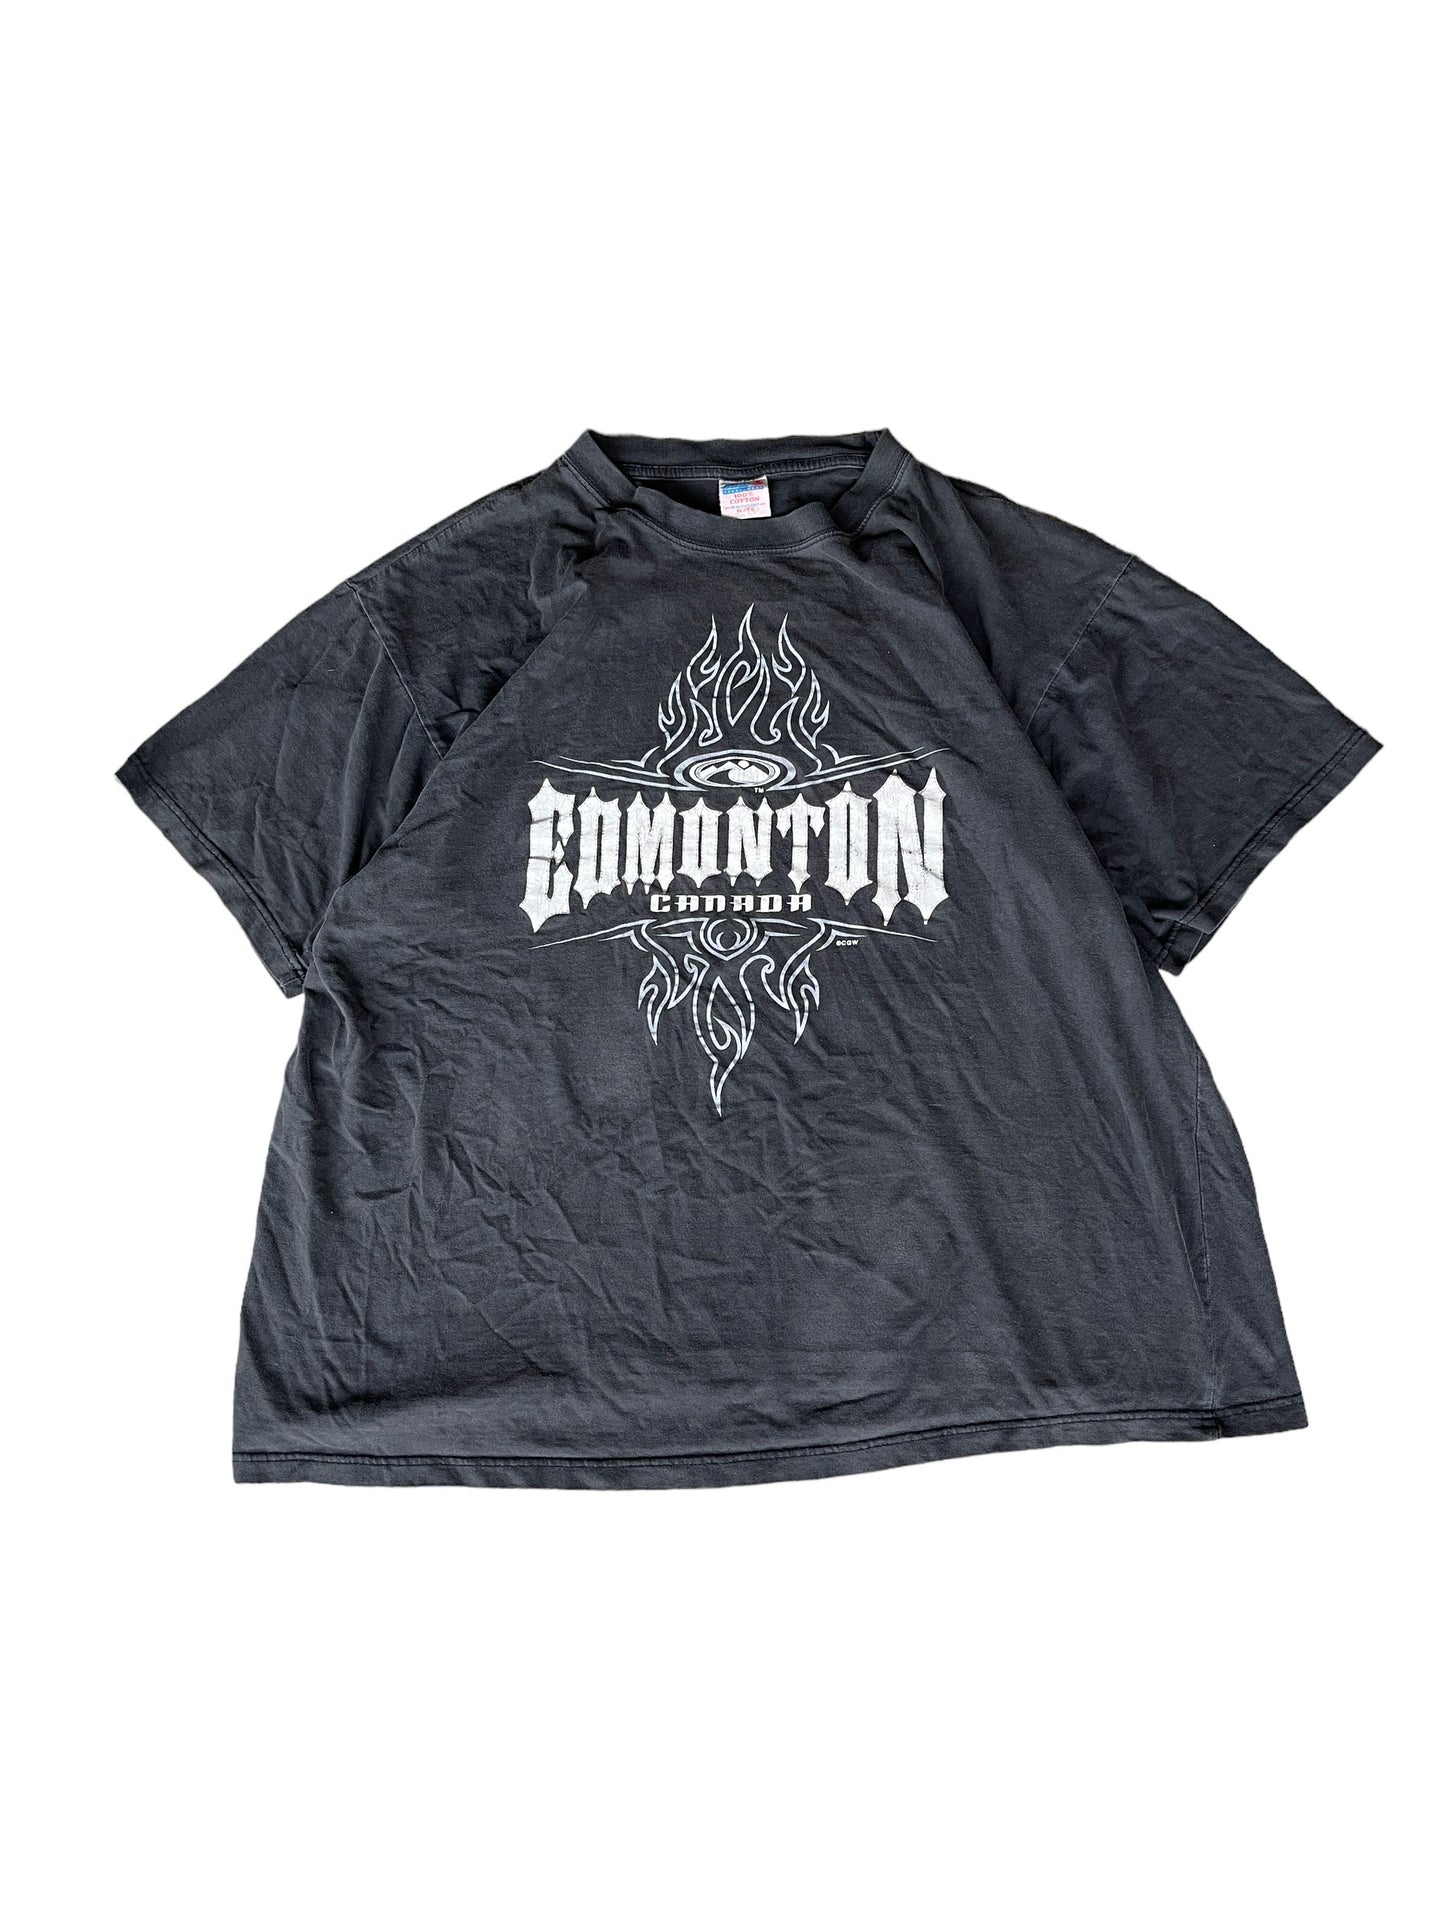 Vintage Edmonton Canada Tee